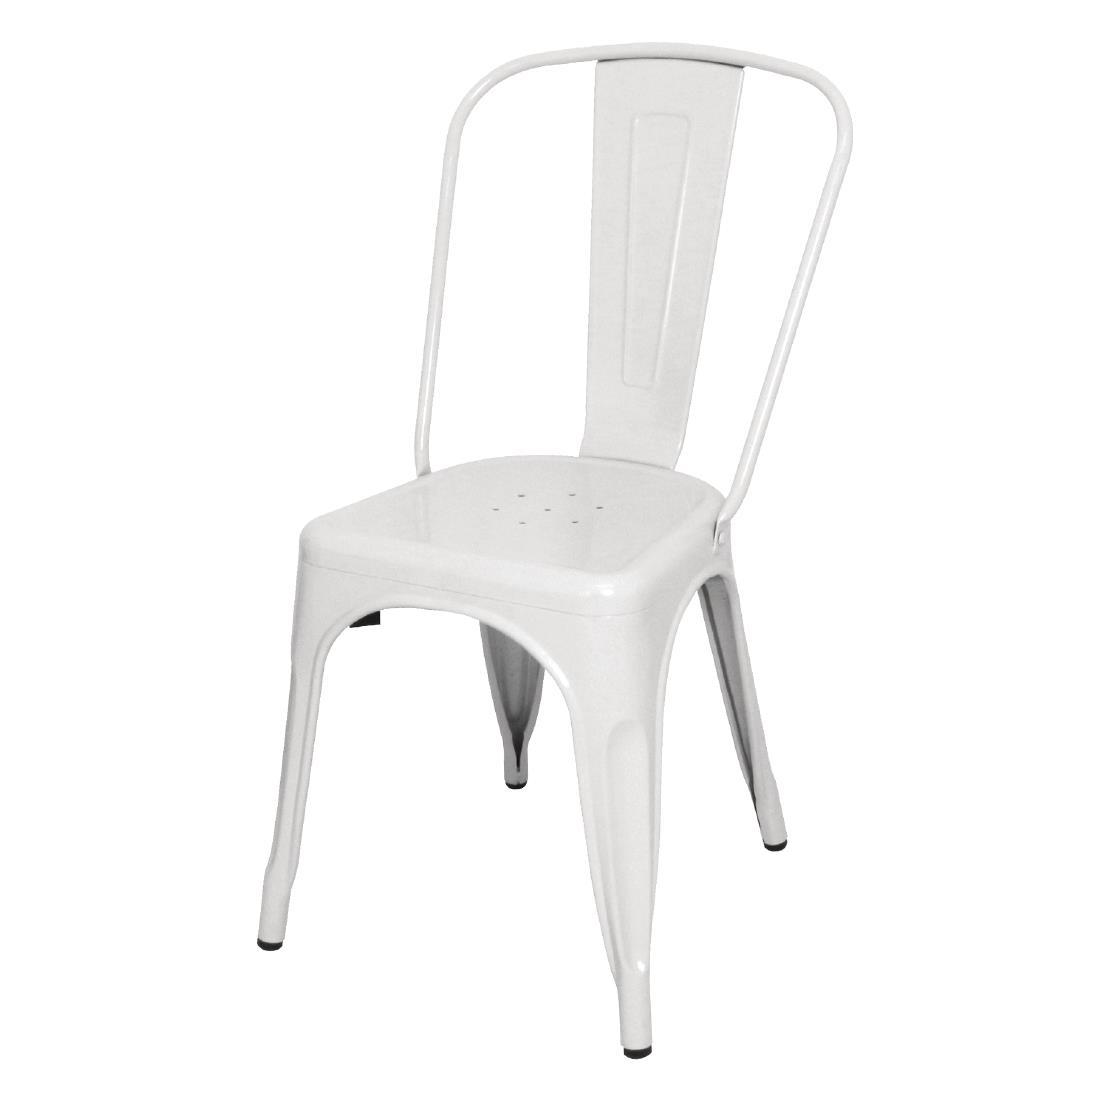 Bolero Bistro Steel Side Chair White (Pack of 4) - GL332  - 2